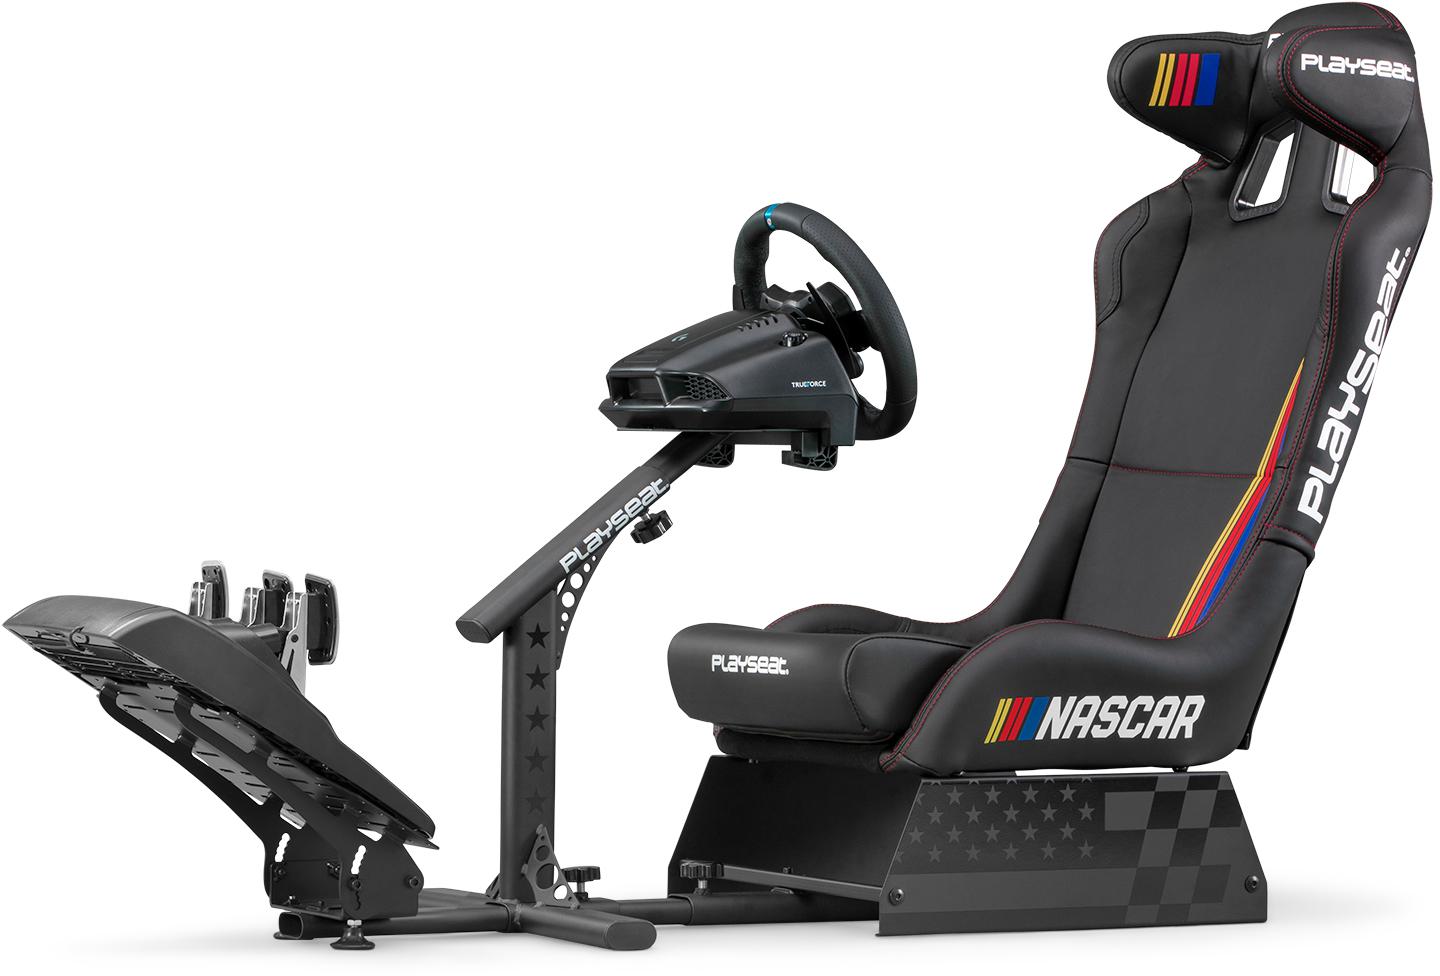 Playseat - Cockpit Playseat® Evolution PRO - NASCAR Edition *LIMITED EDITION*